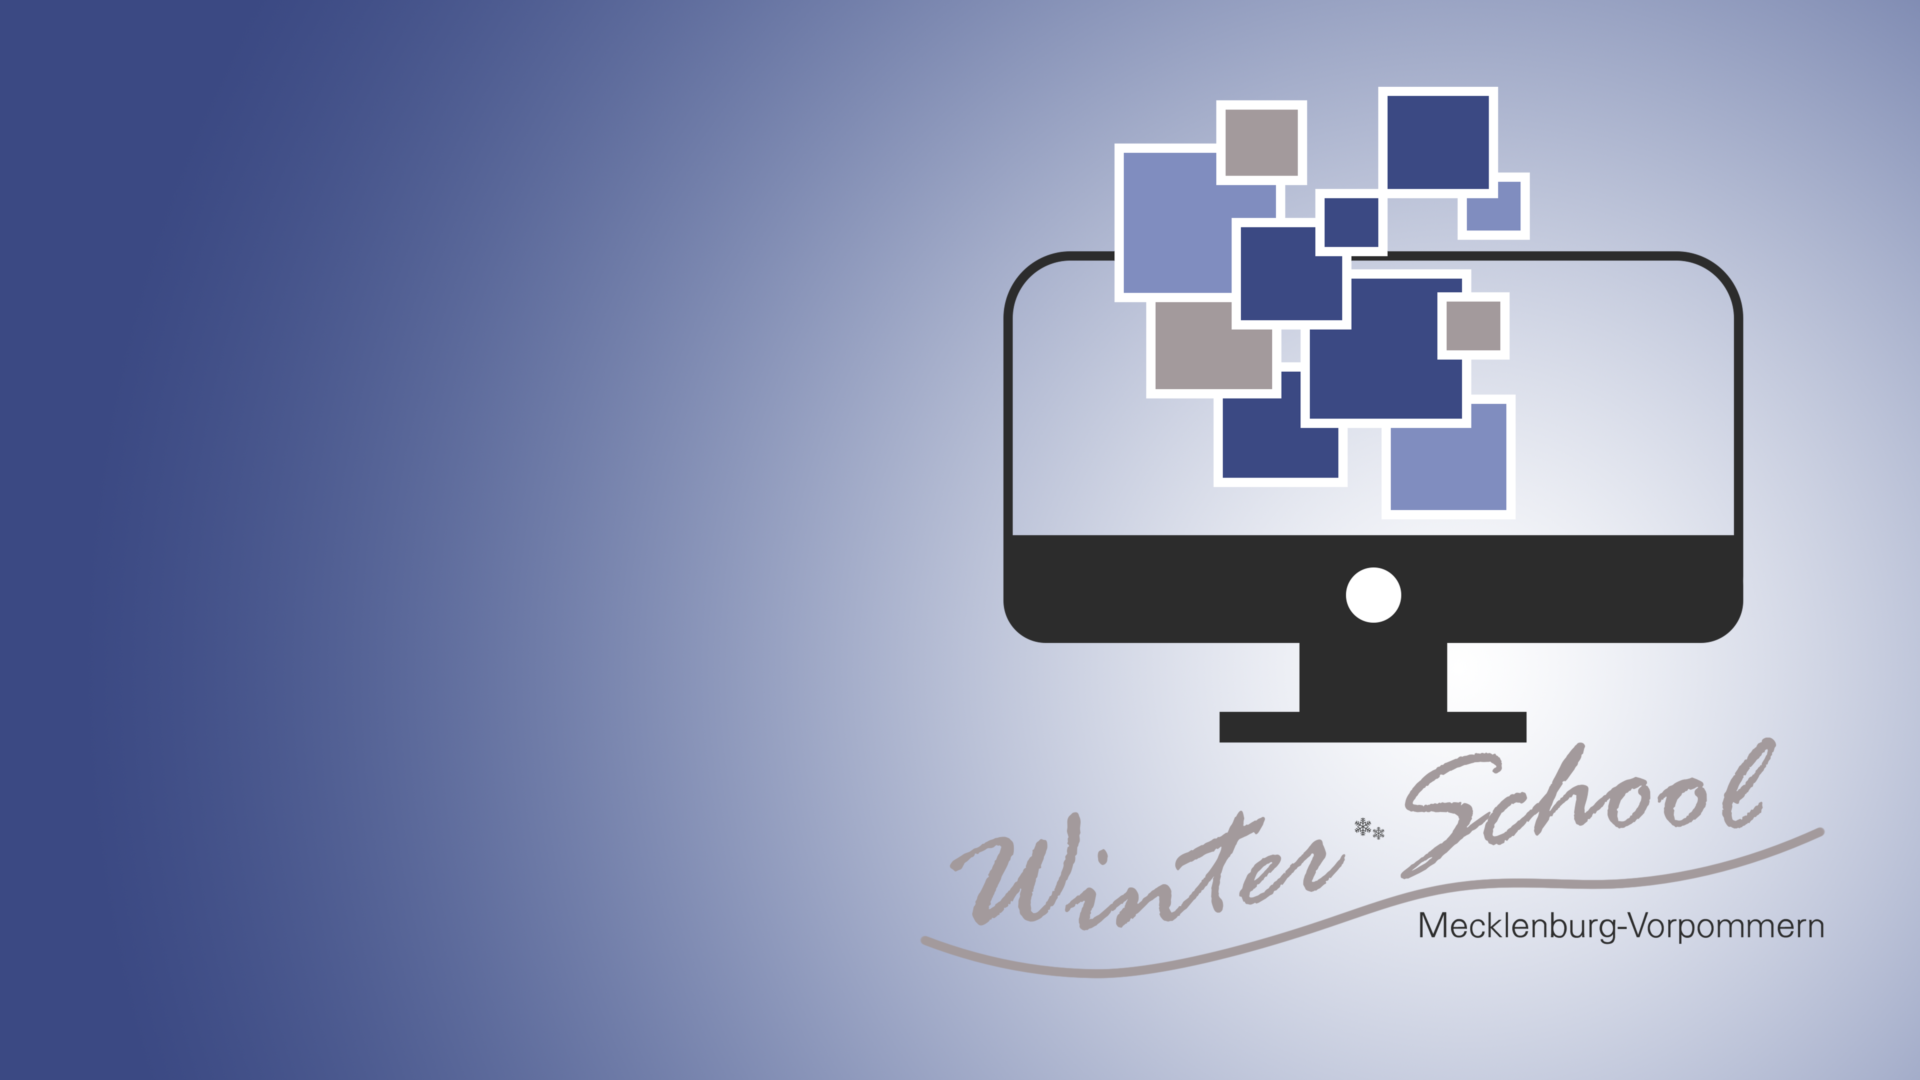 Winter School "1x1 der digitalen Lehre"